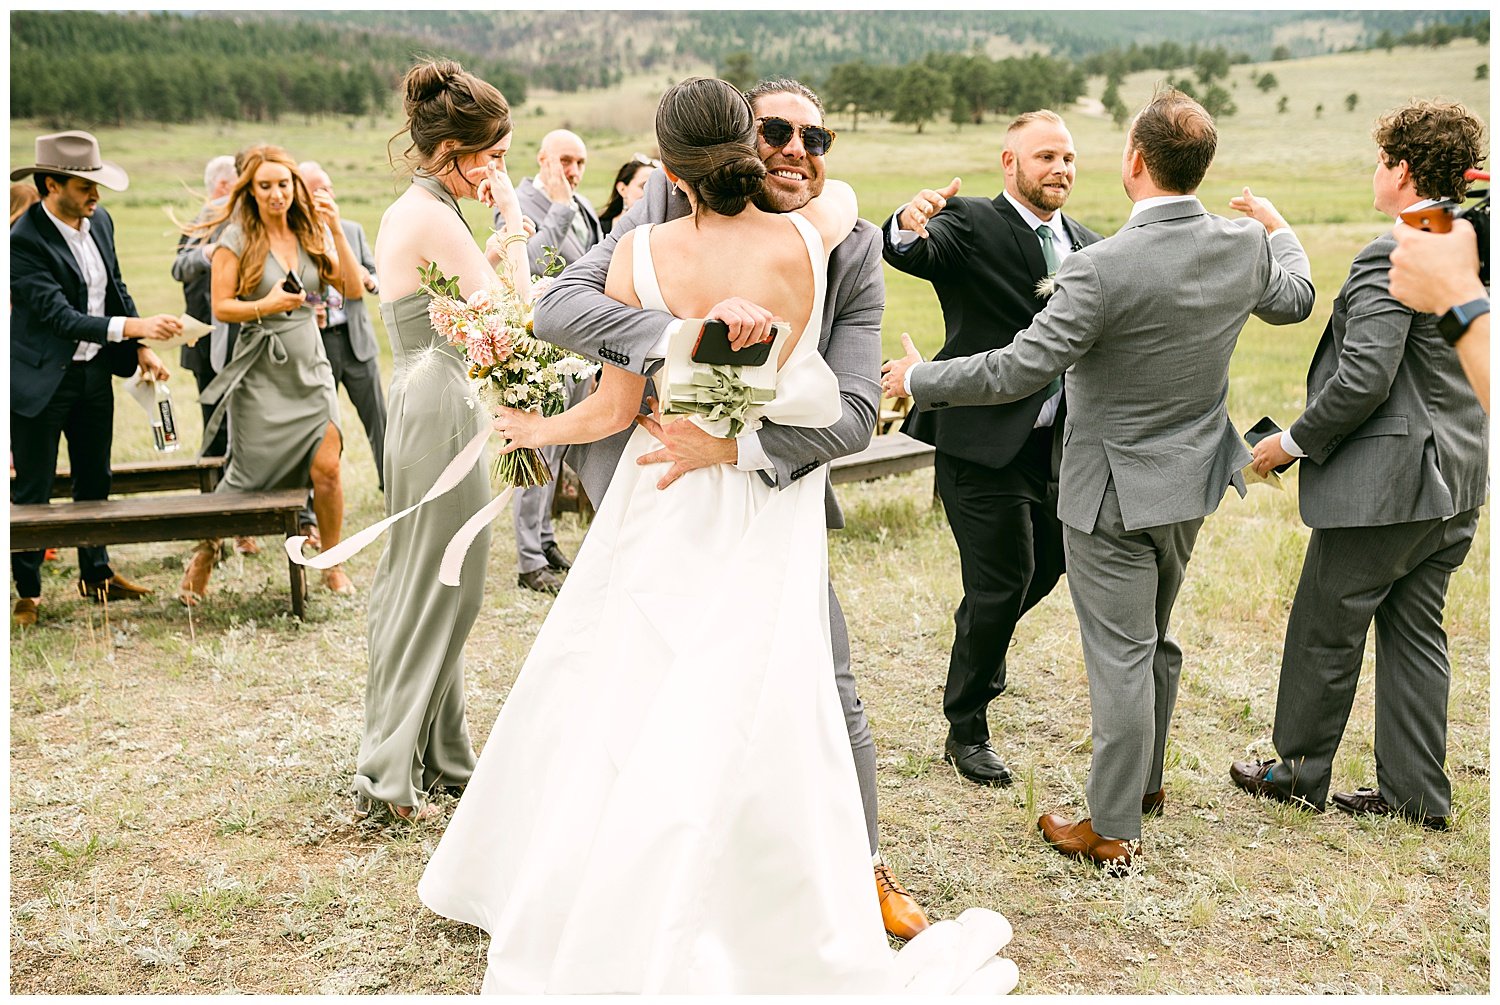 Rocky-Mountain-National-Park-Wedding-Photography-Apollo-Fields-51.jpg